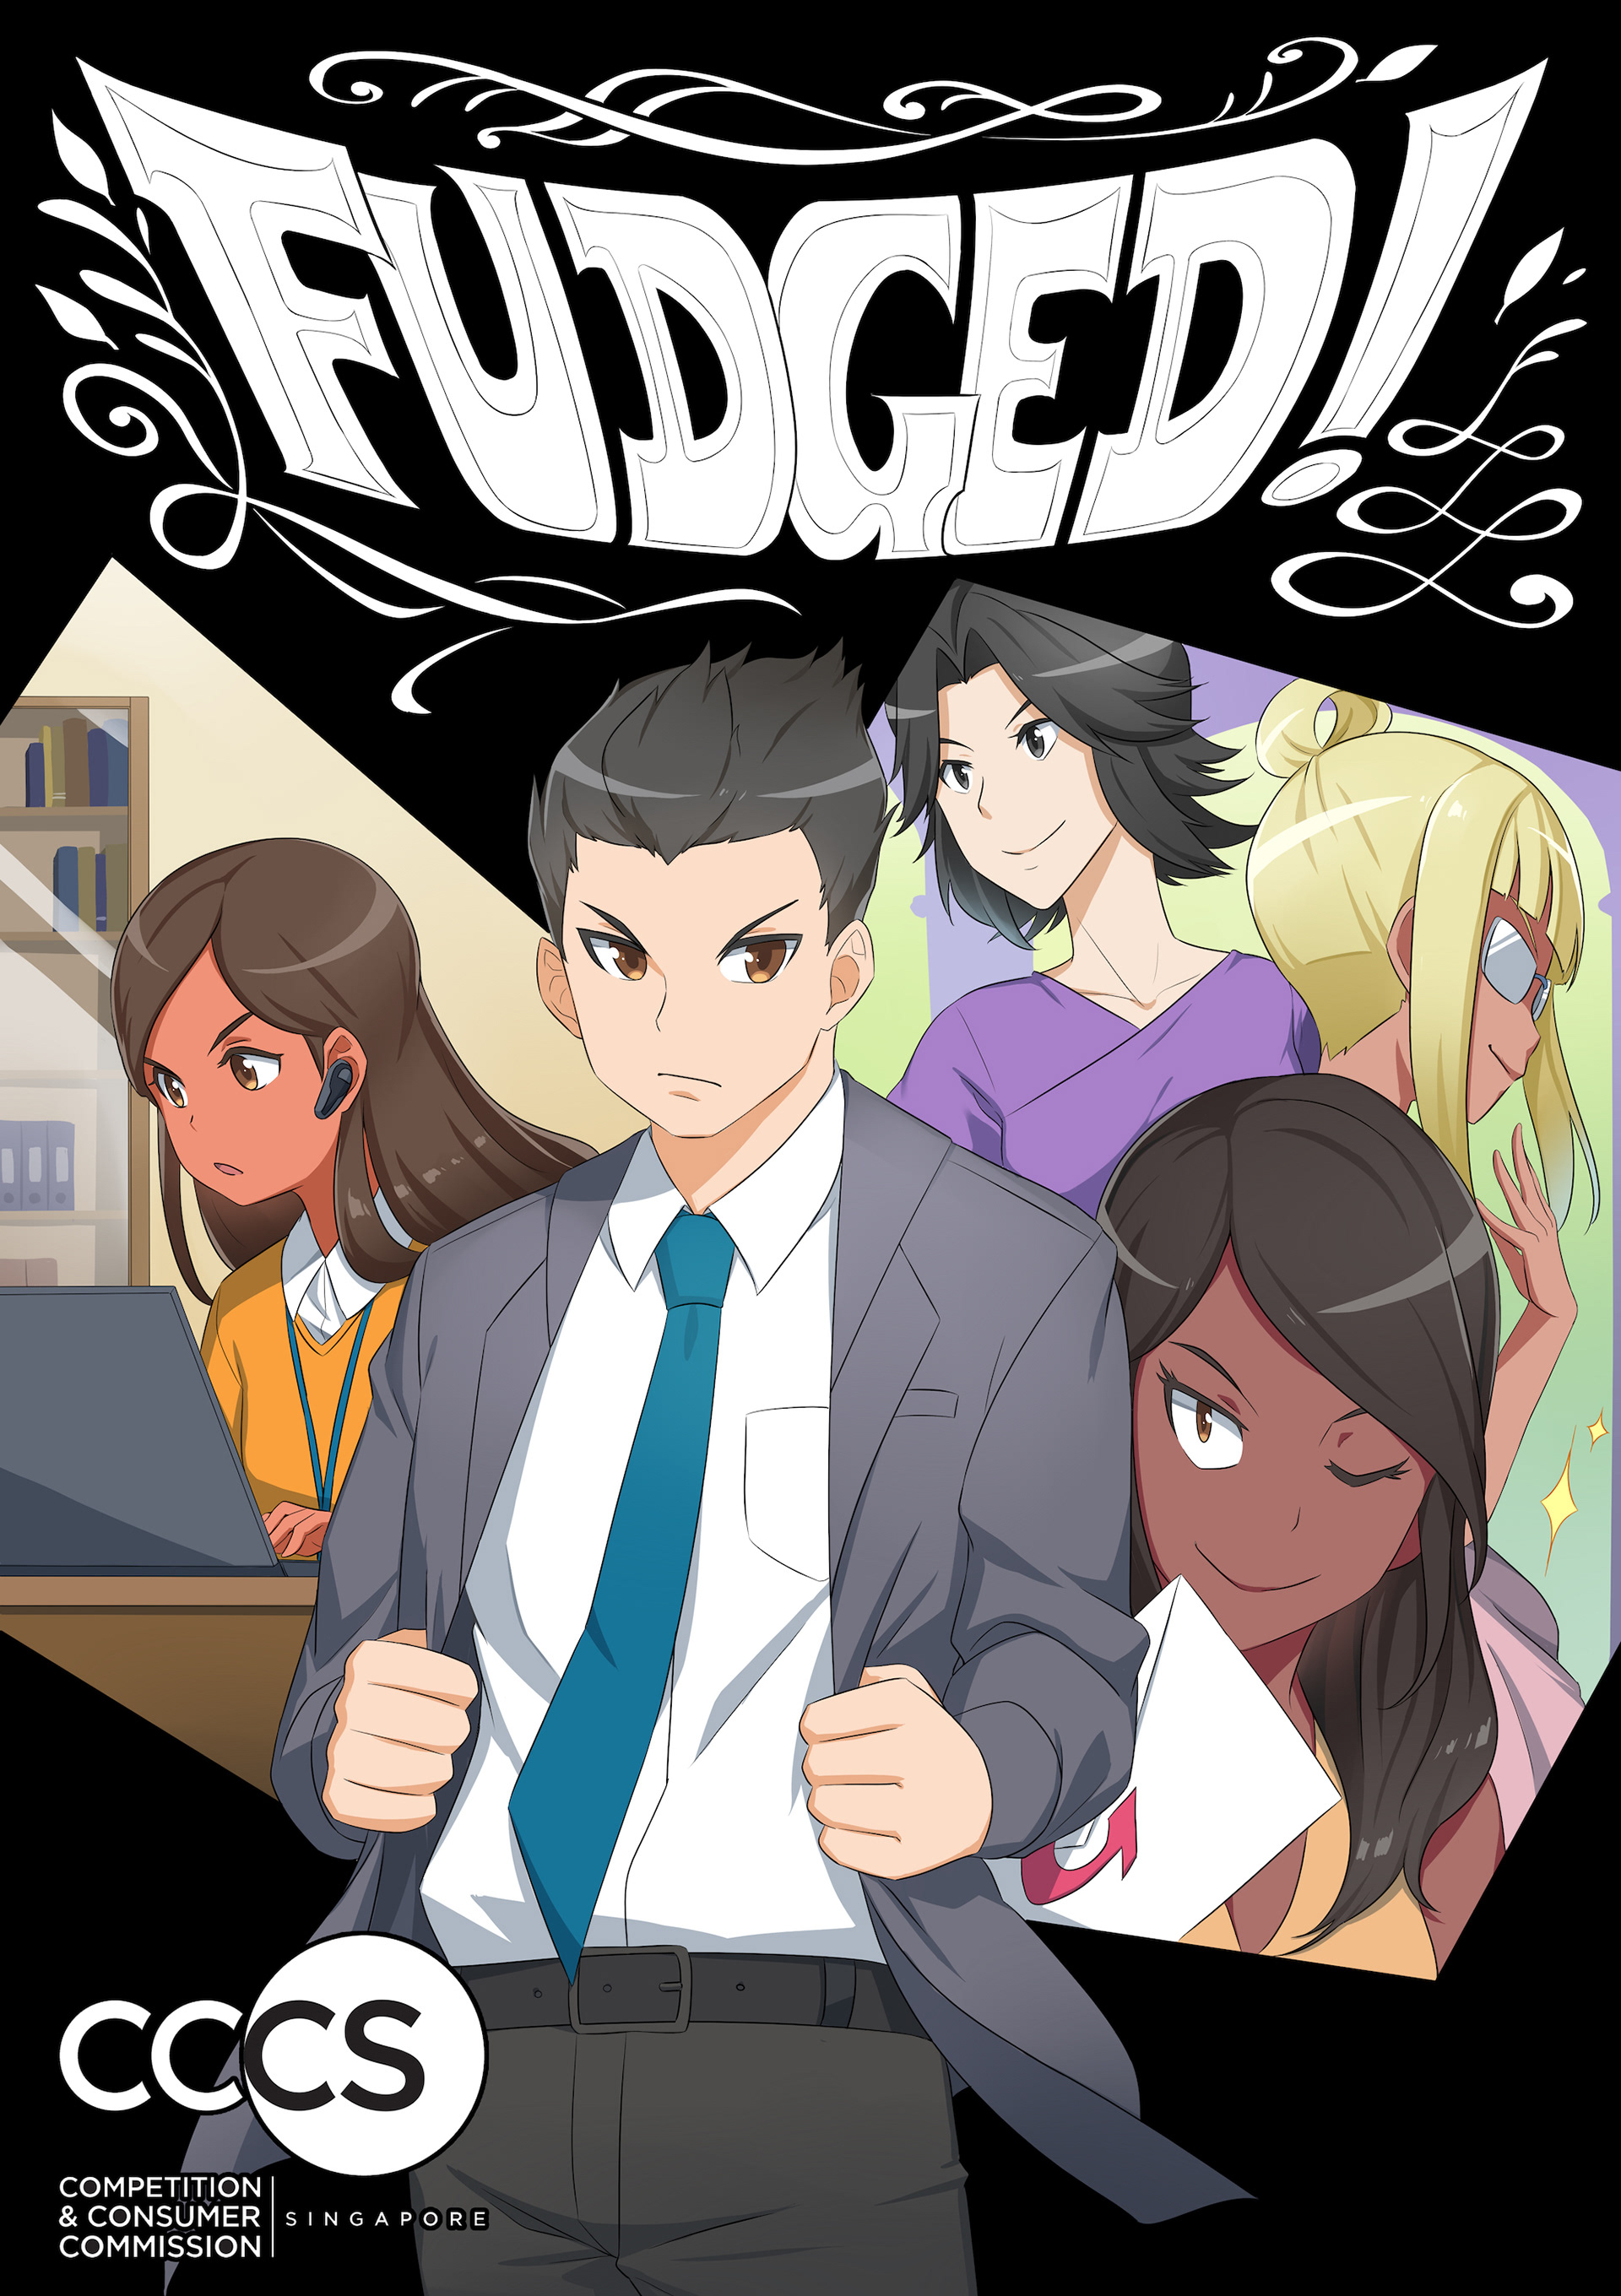 Fudged manga cover art